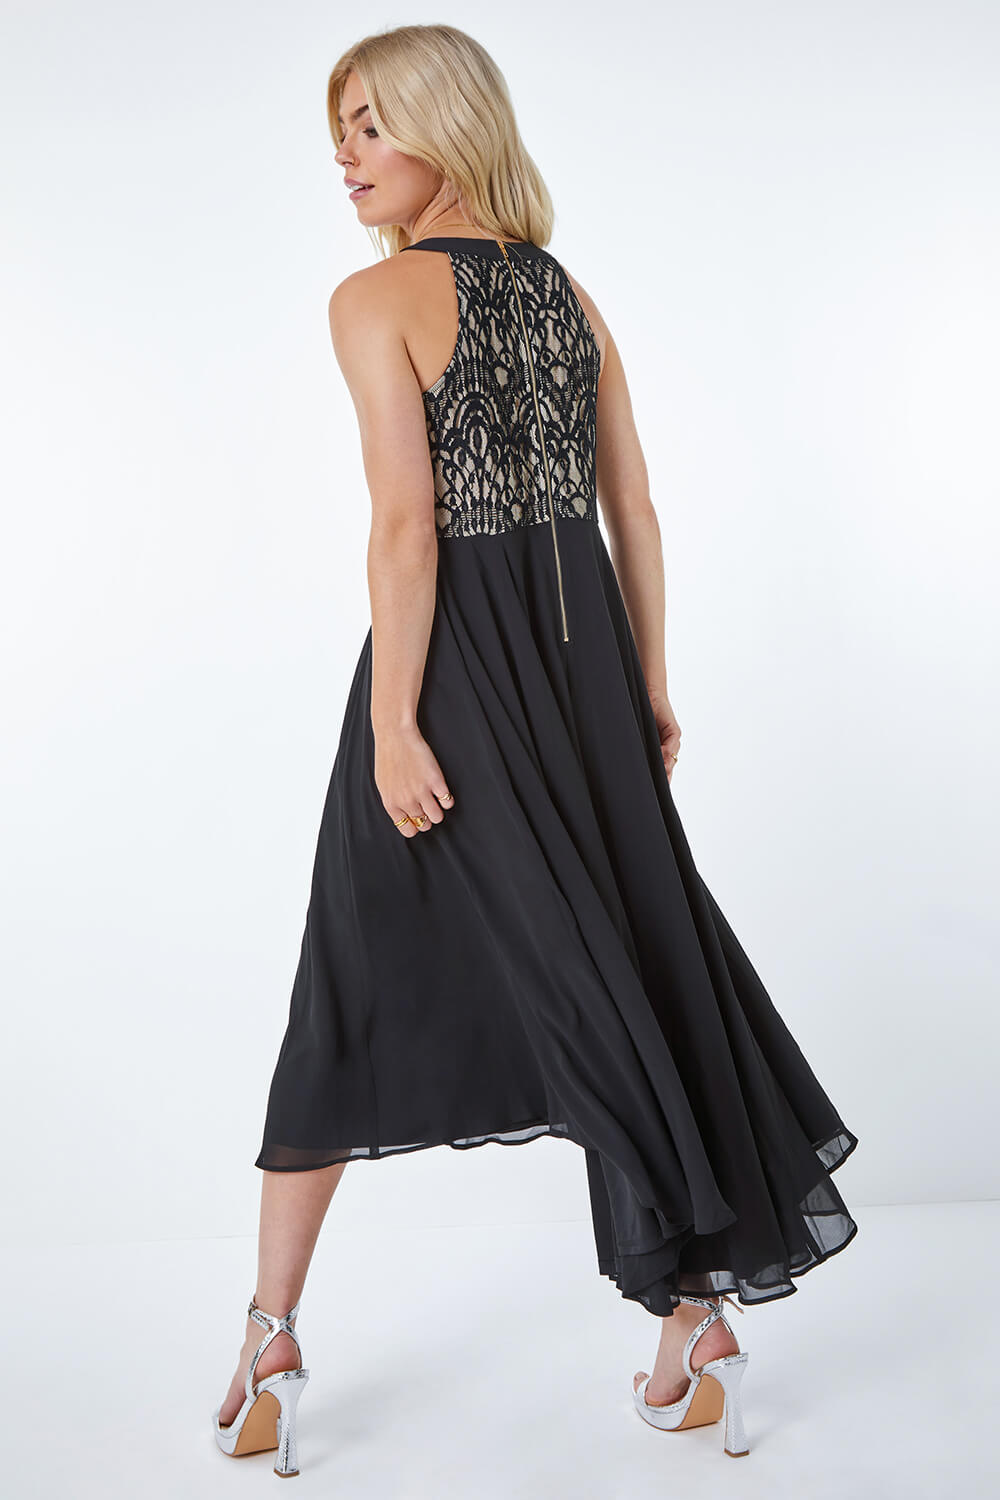 Black Lace Bodice Halter Neck Dress, Image 3 of 5